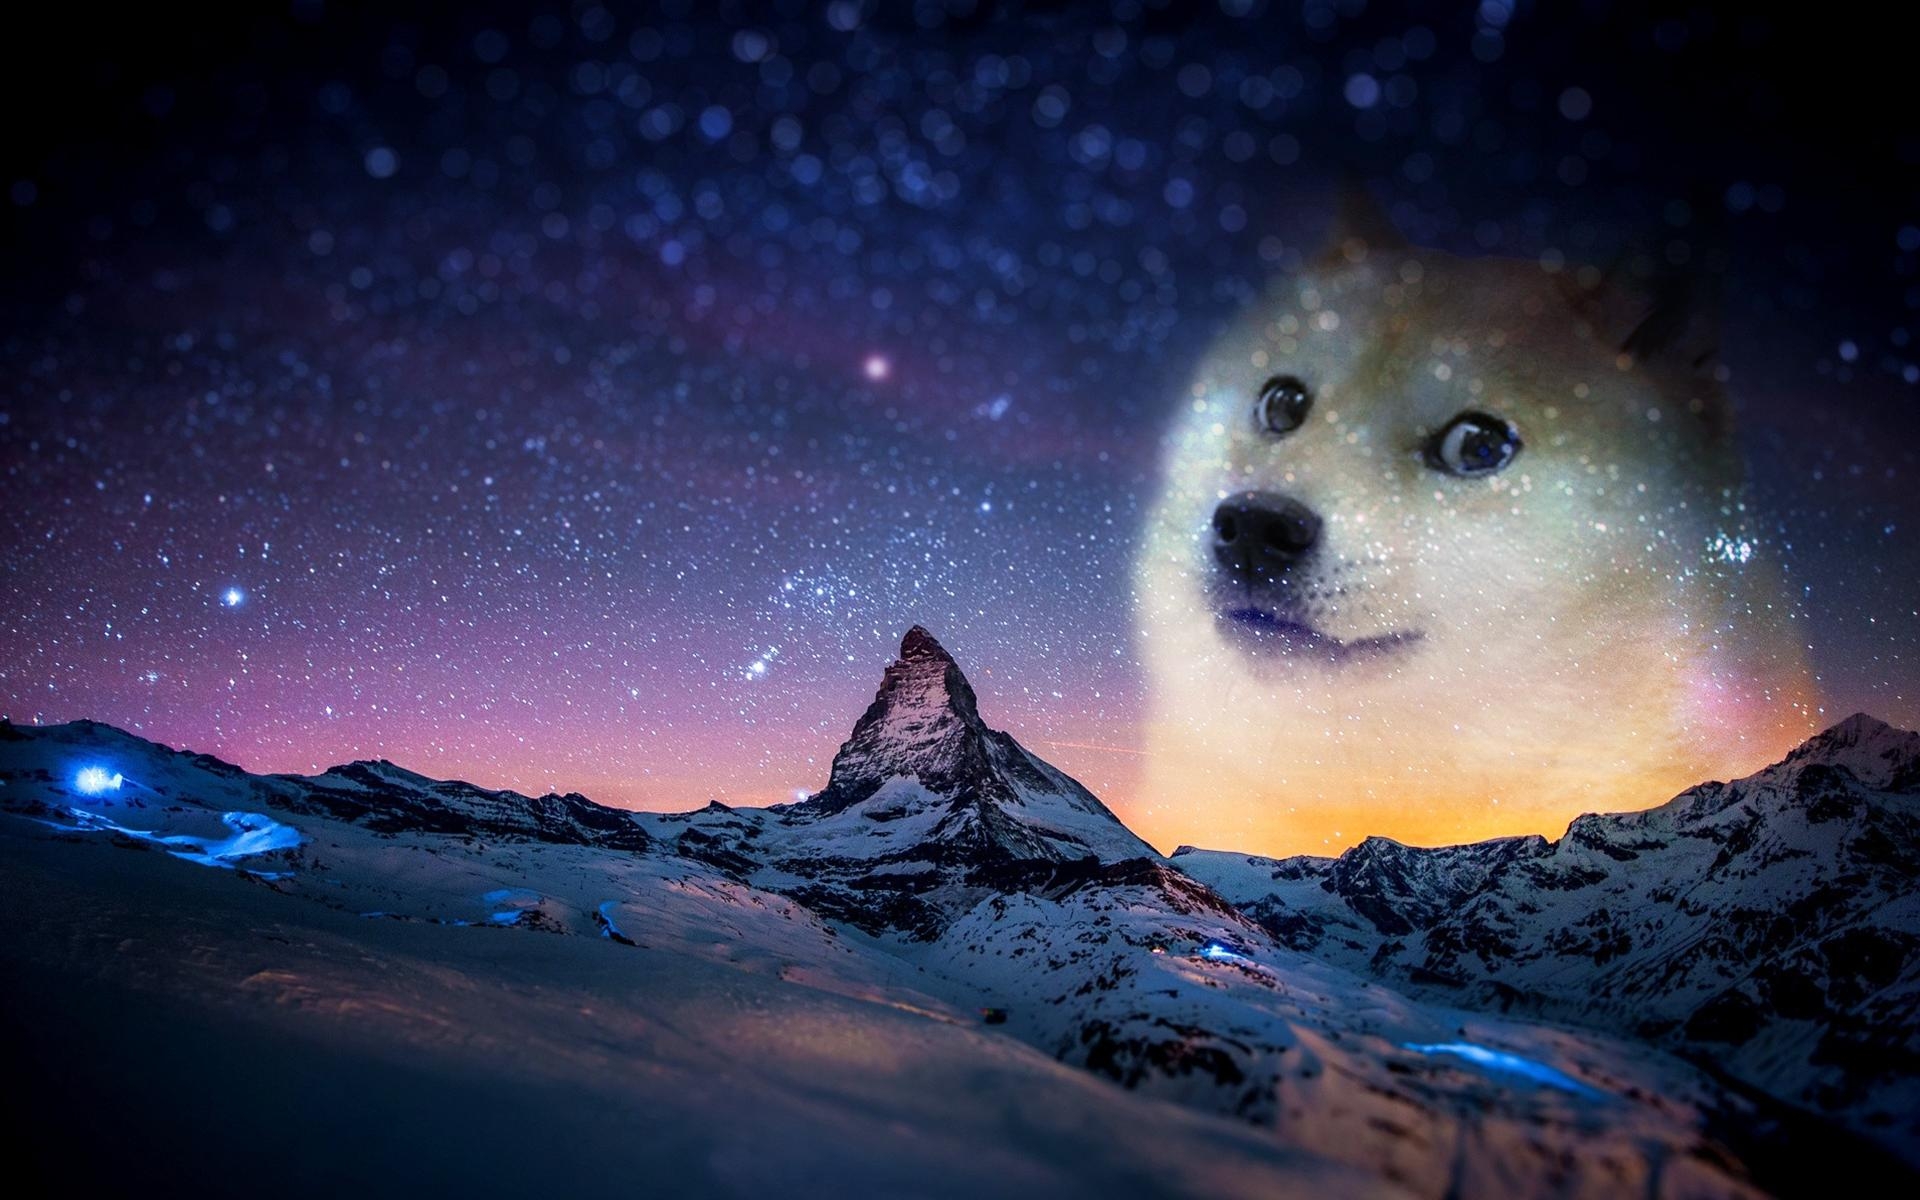 twinkie doge in space